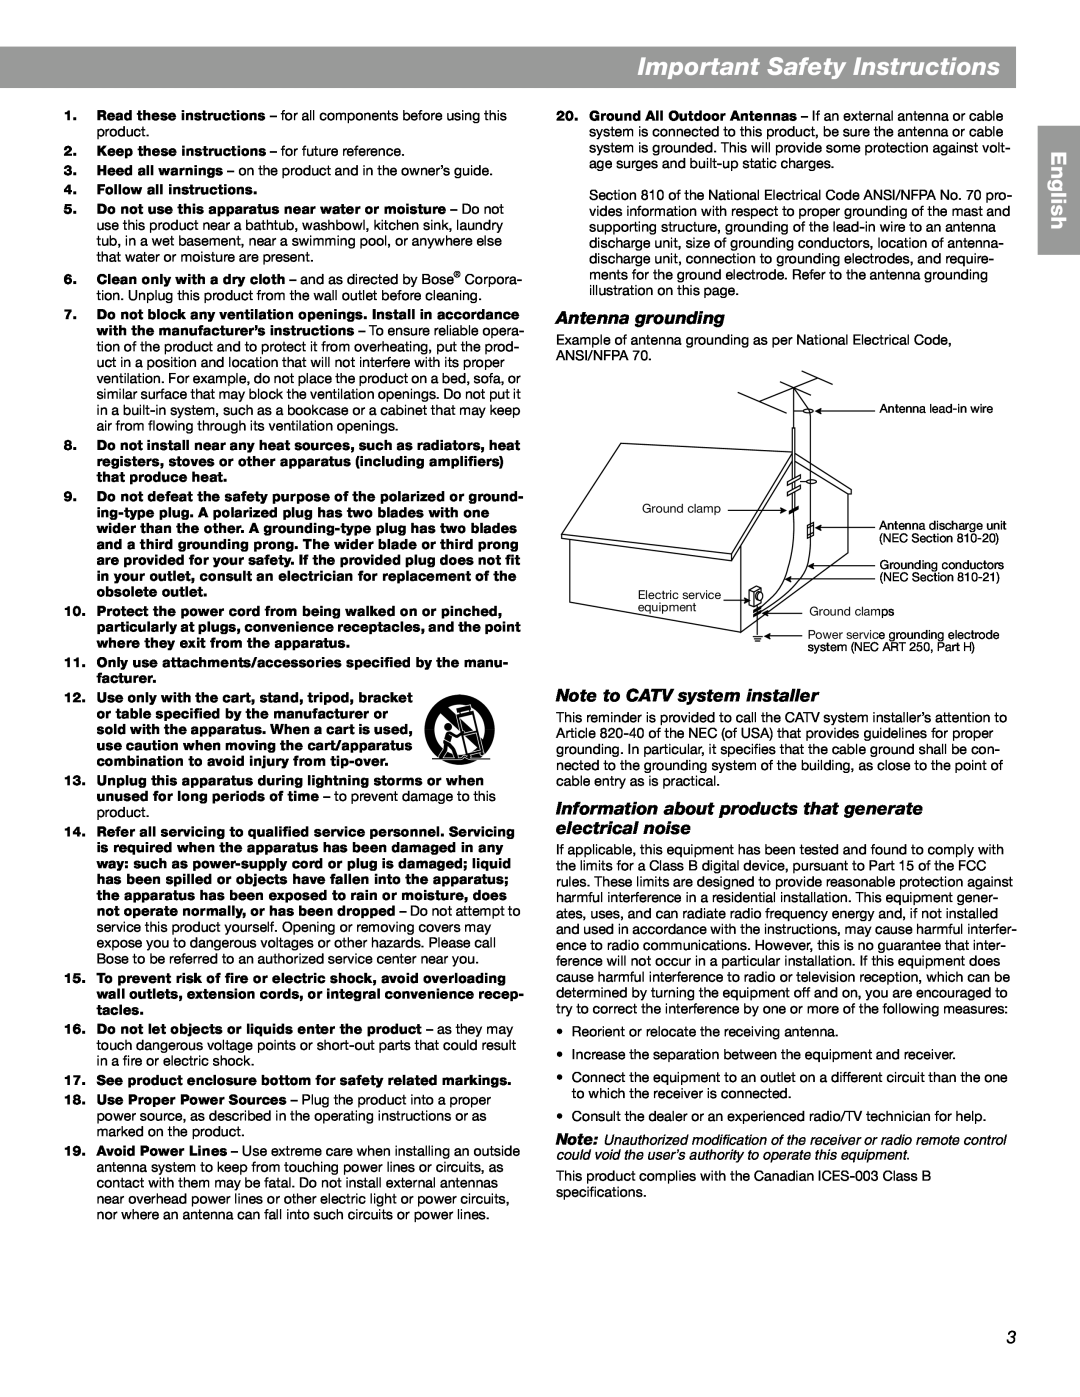 Bose SA-3, SA-2 manual Important Safety Instructions, Antenna grounding, Note to CATV system installer, English 